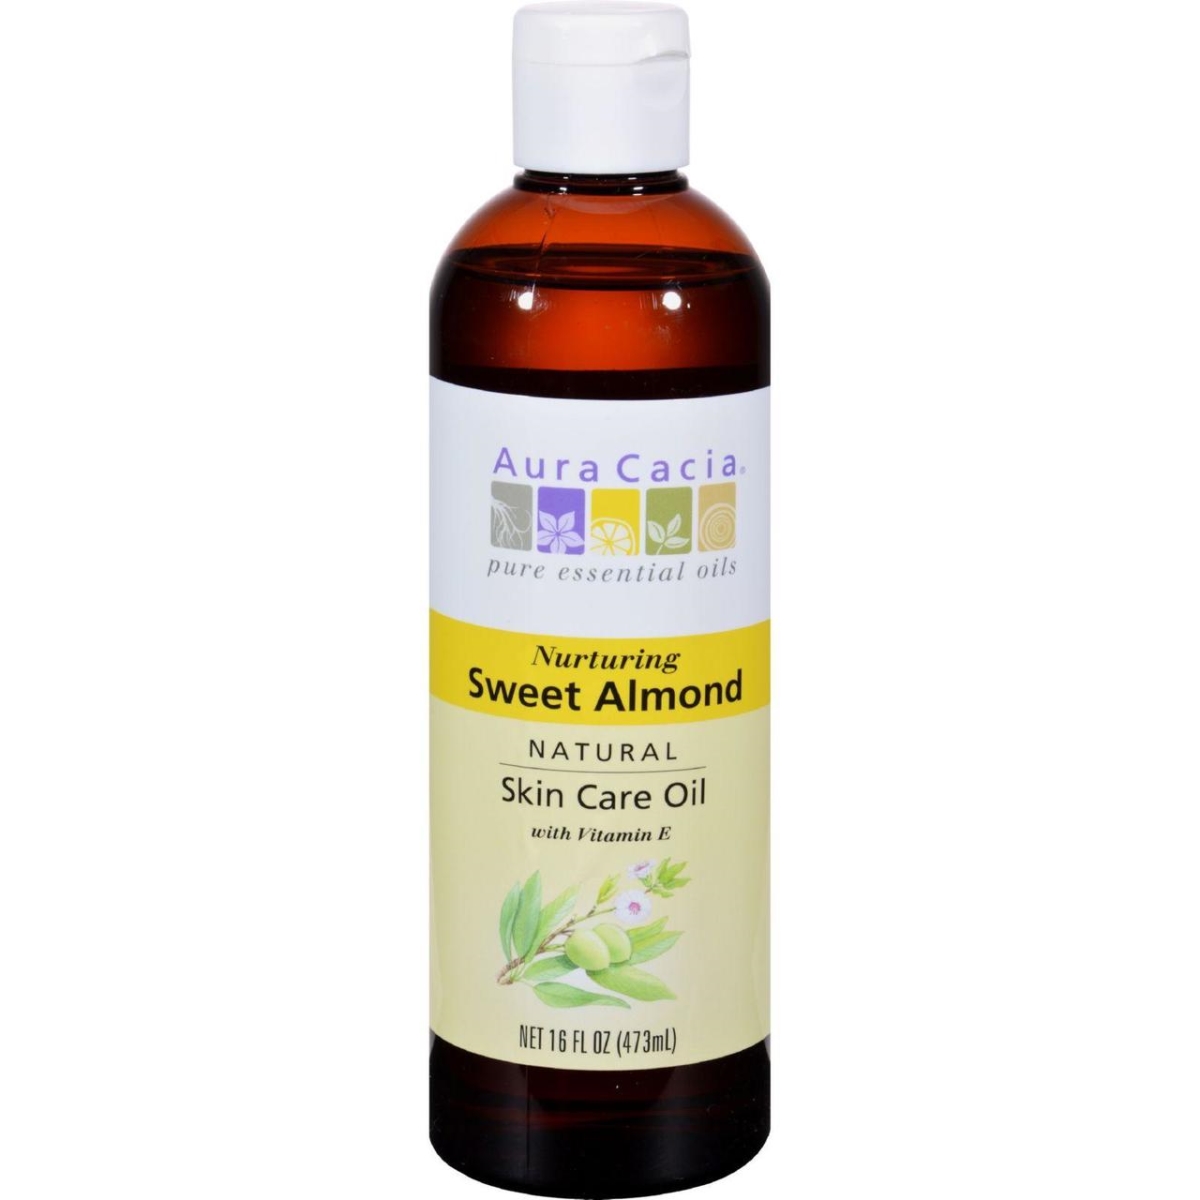 Hg0615484 16 Fl Oz Natural Skin Care Oil, Sweet Almond